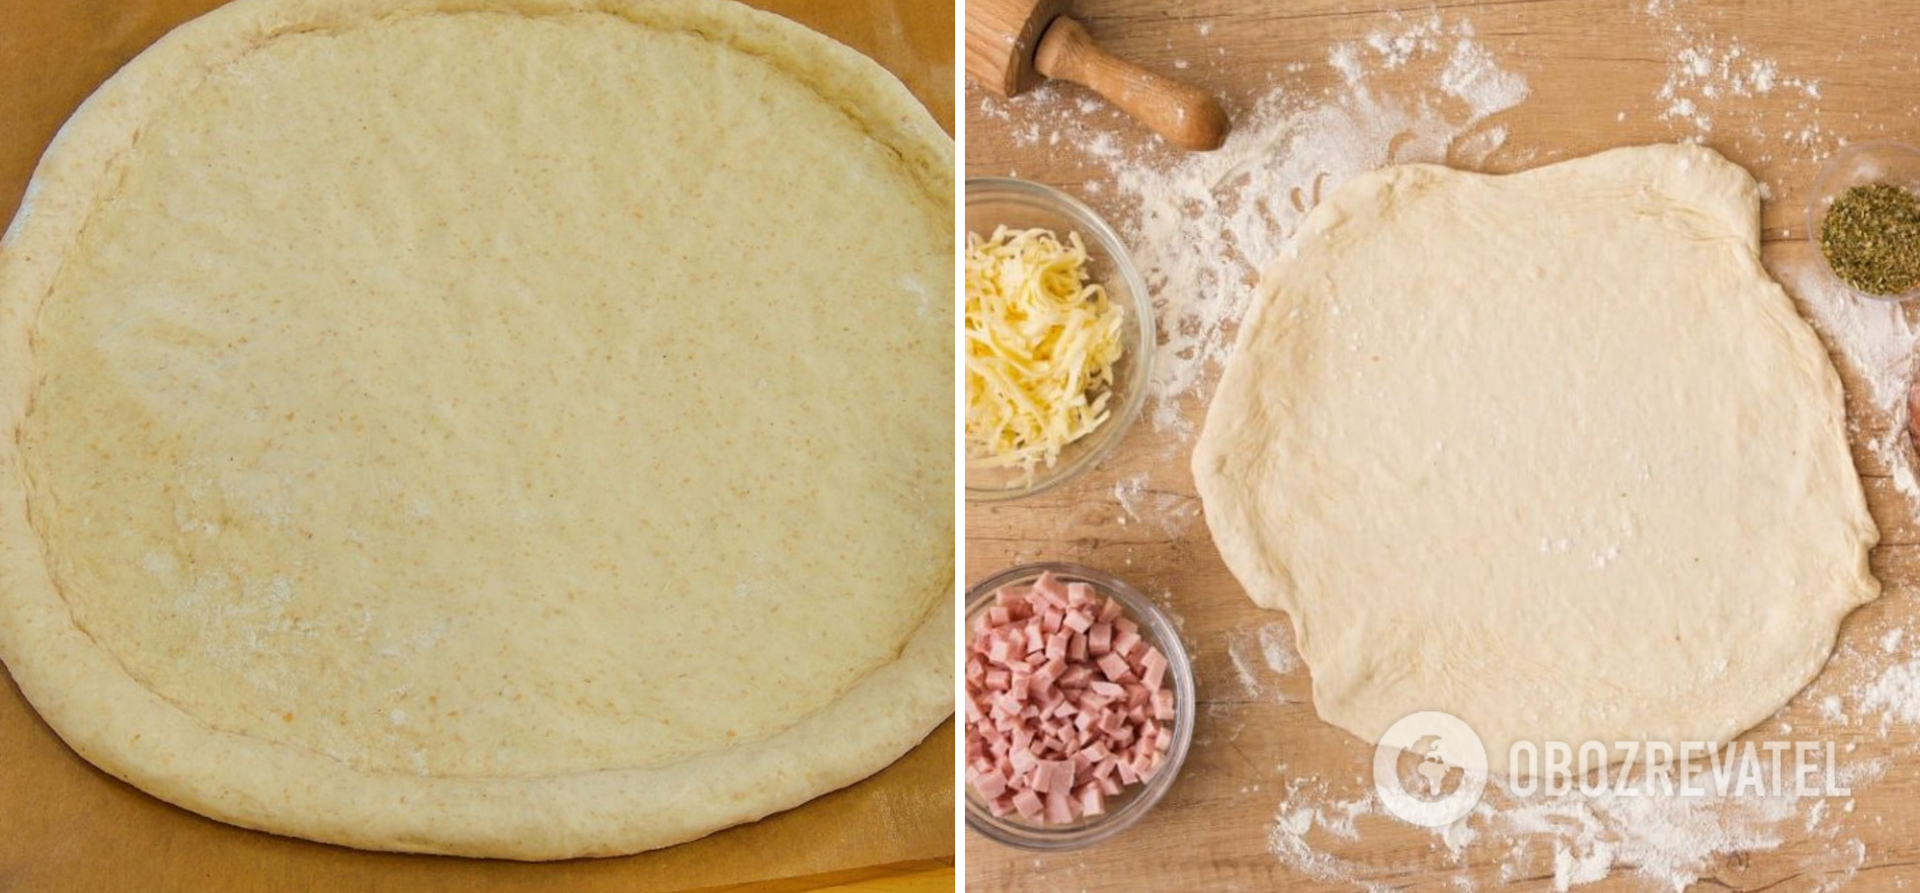 Thin pizza dough